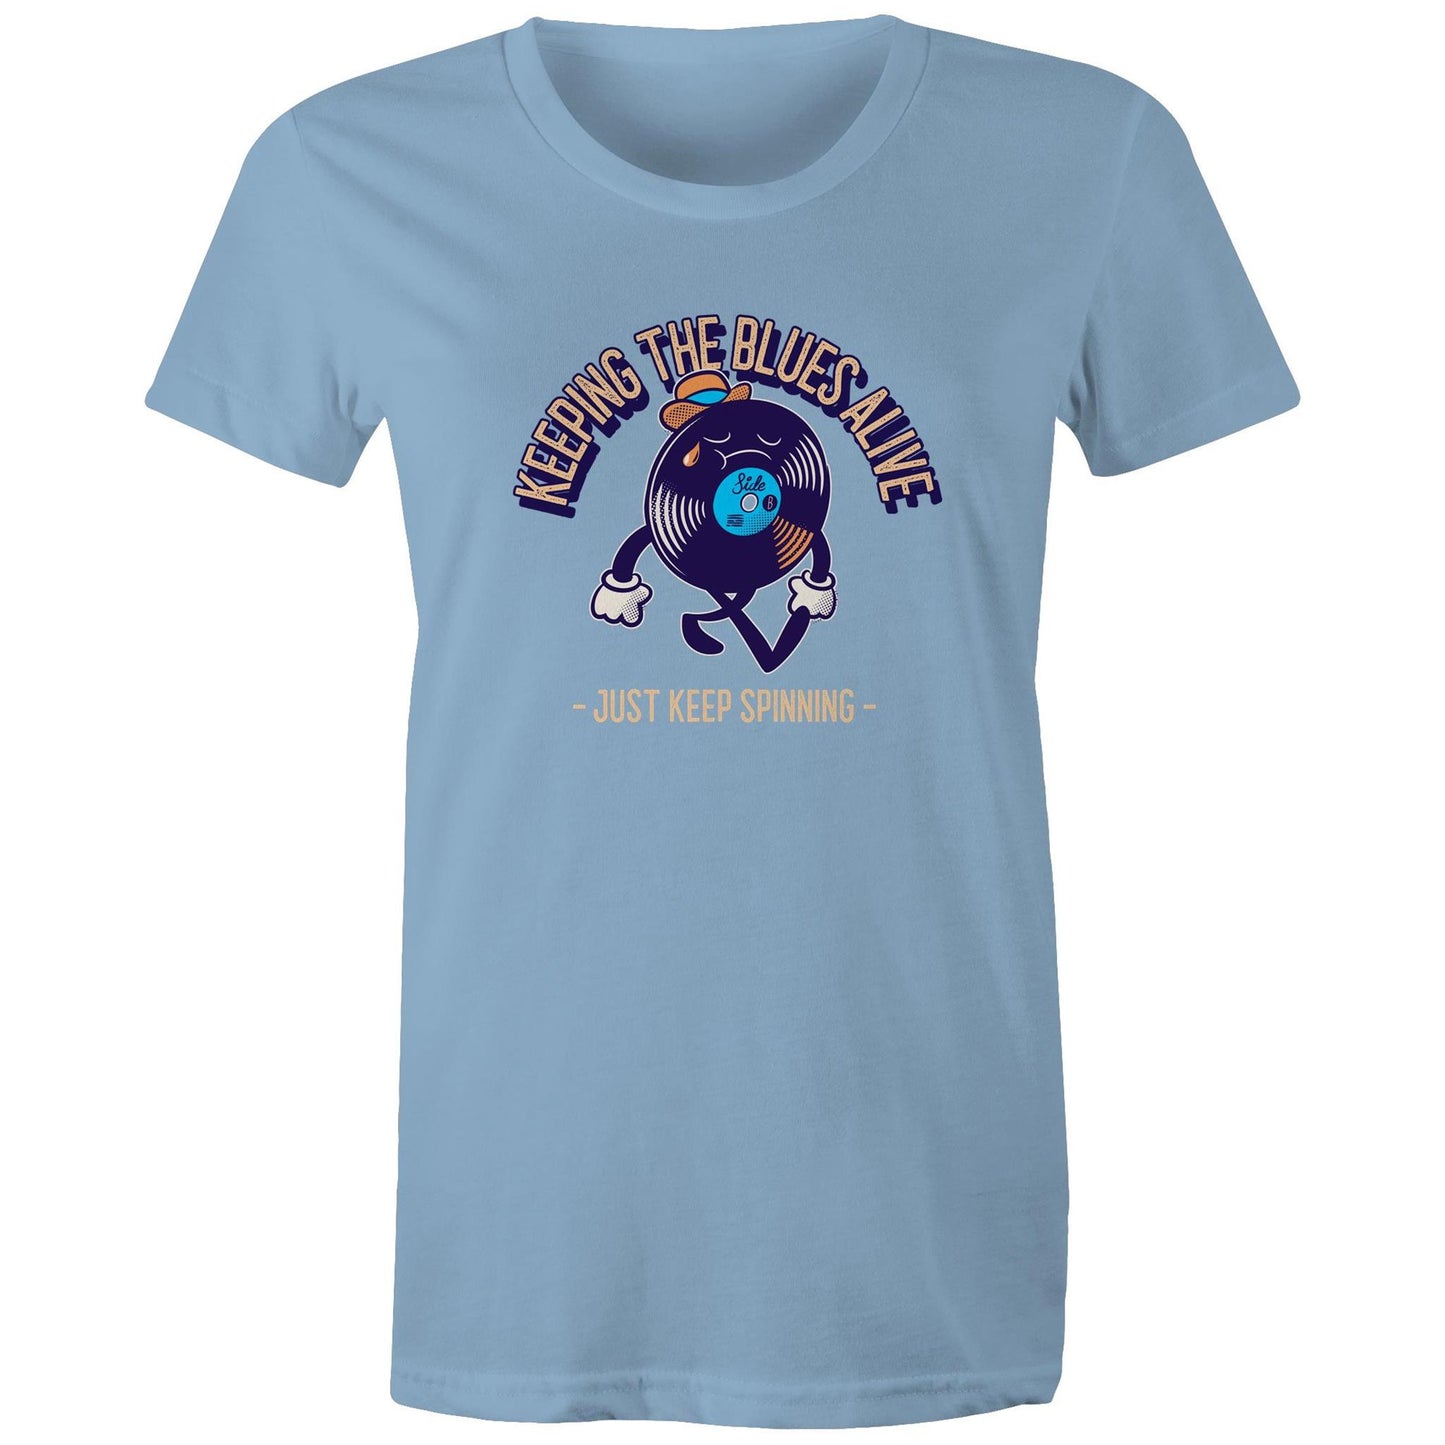 Keeping The Blues Alive - Womens T-shirt Carolina Blue Womens T-shirt Music